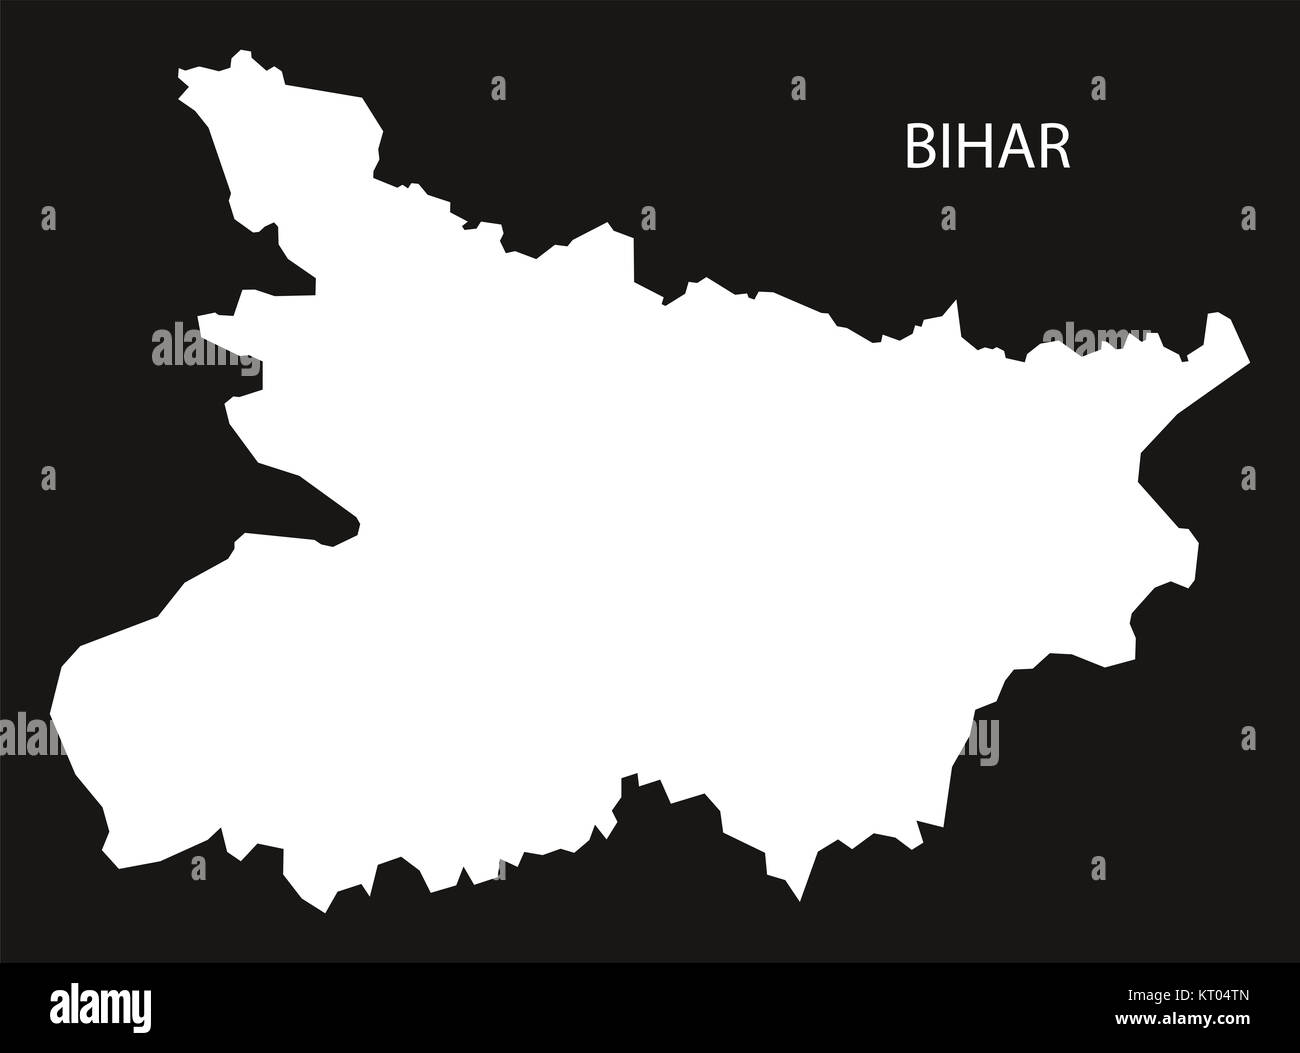 Bihar India Map black inverted Stock Photo